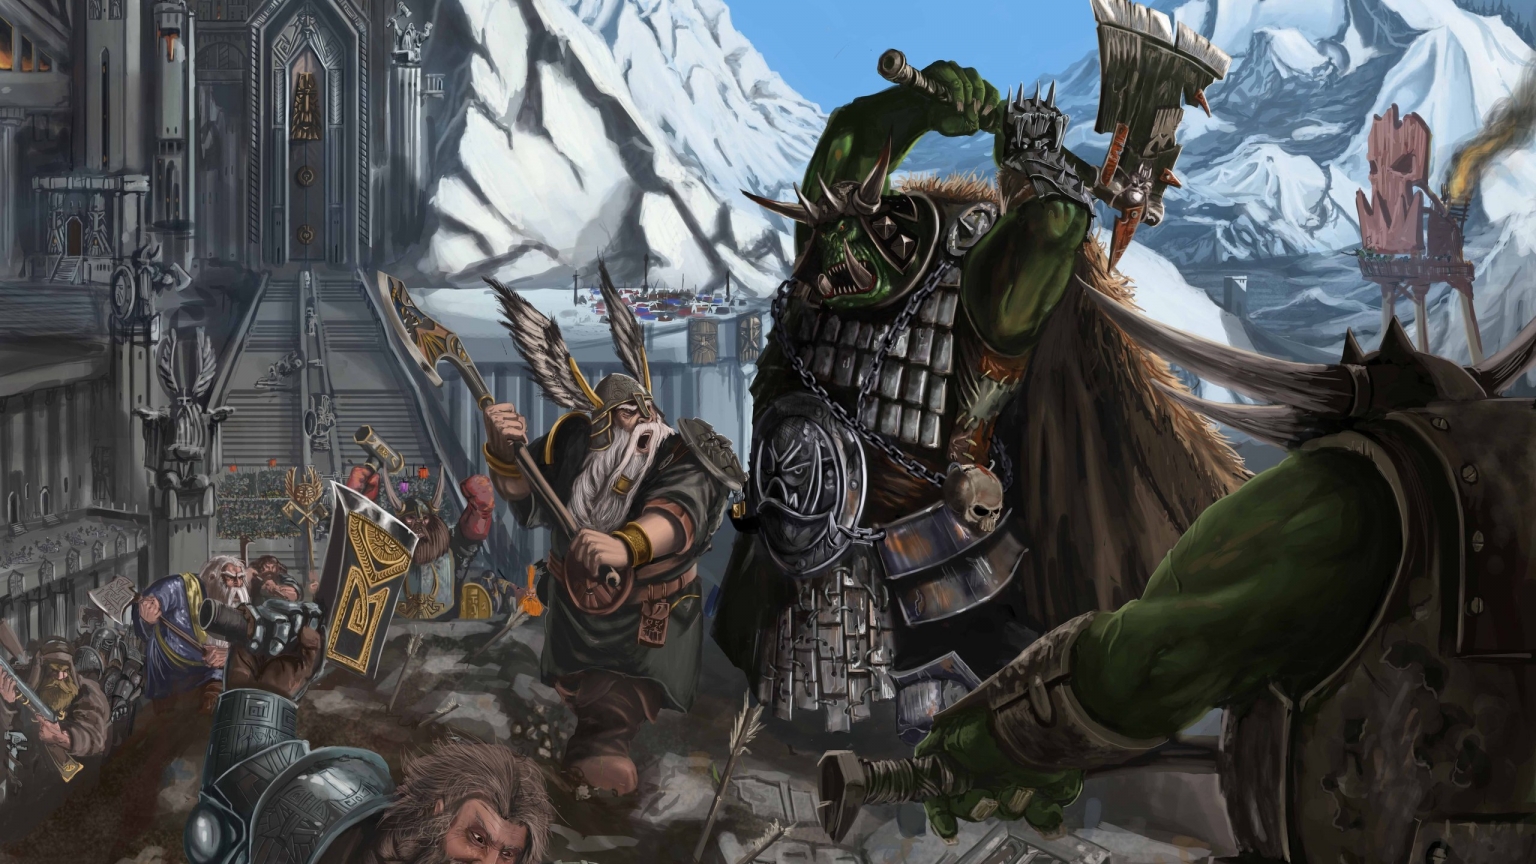 Warhammer Fantasy Battles for 1536 x 864 HDTV resolution